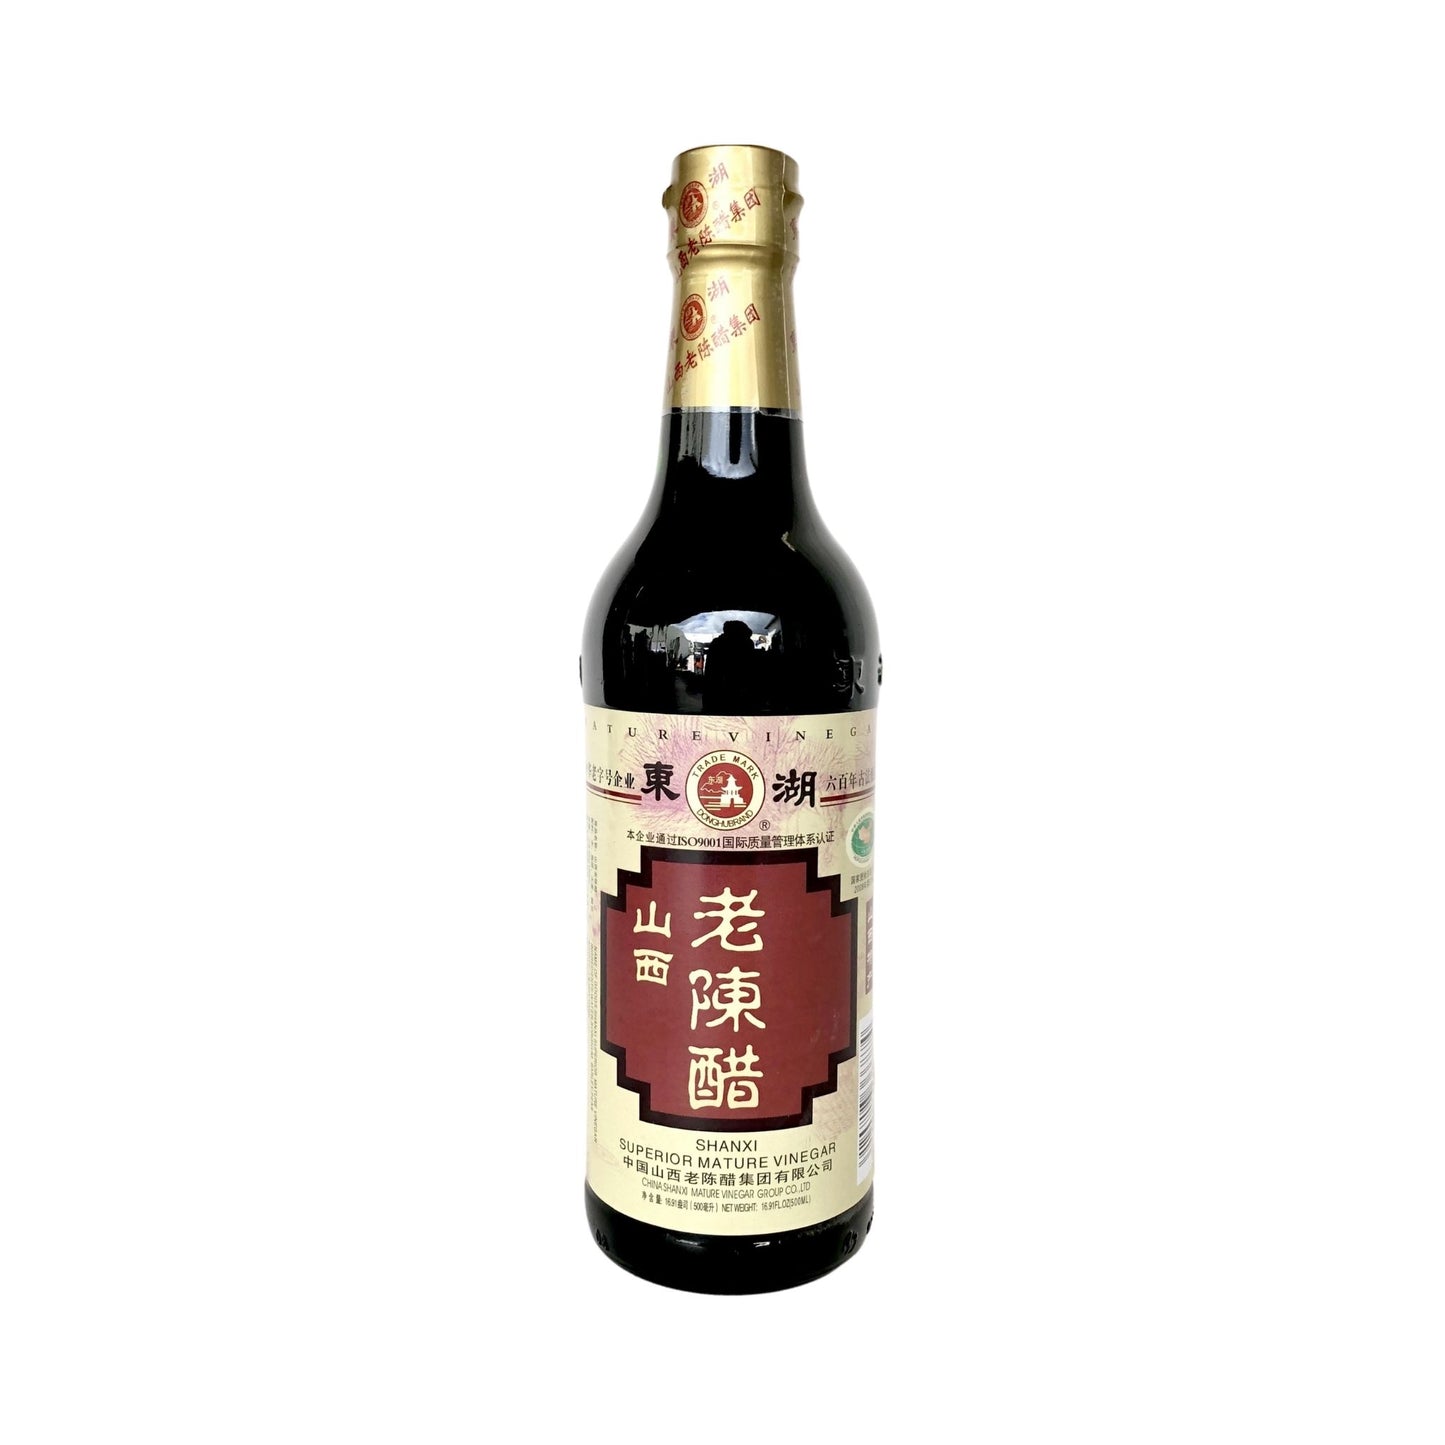 Shanxi Superior Mature Vinegar 山西老陈醋 (16.9 FL OZ)